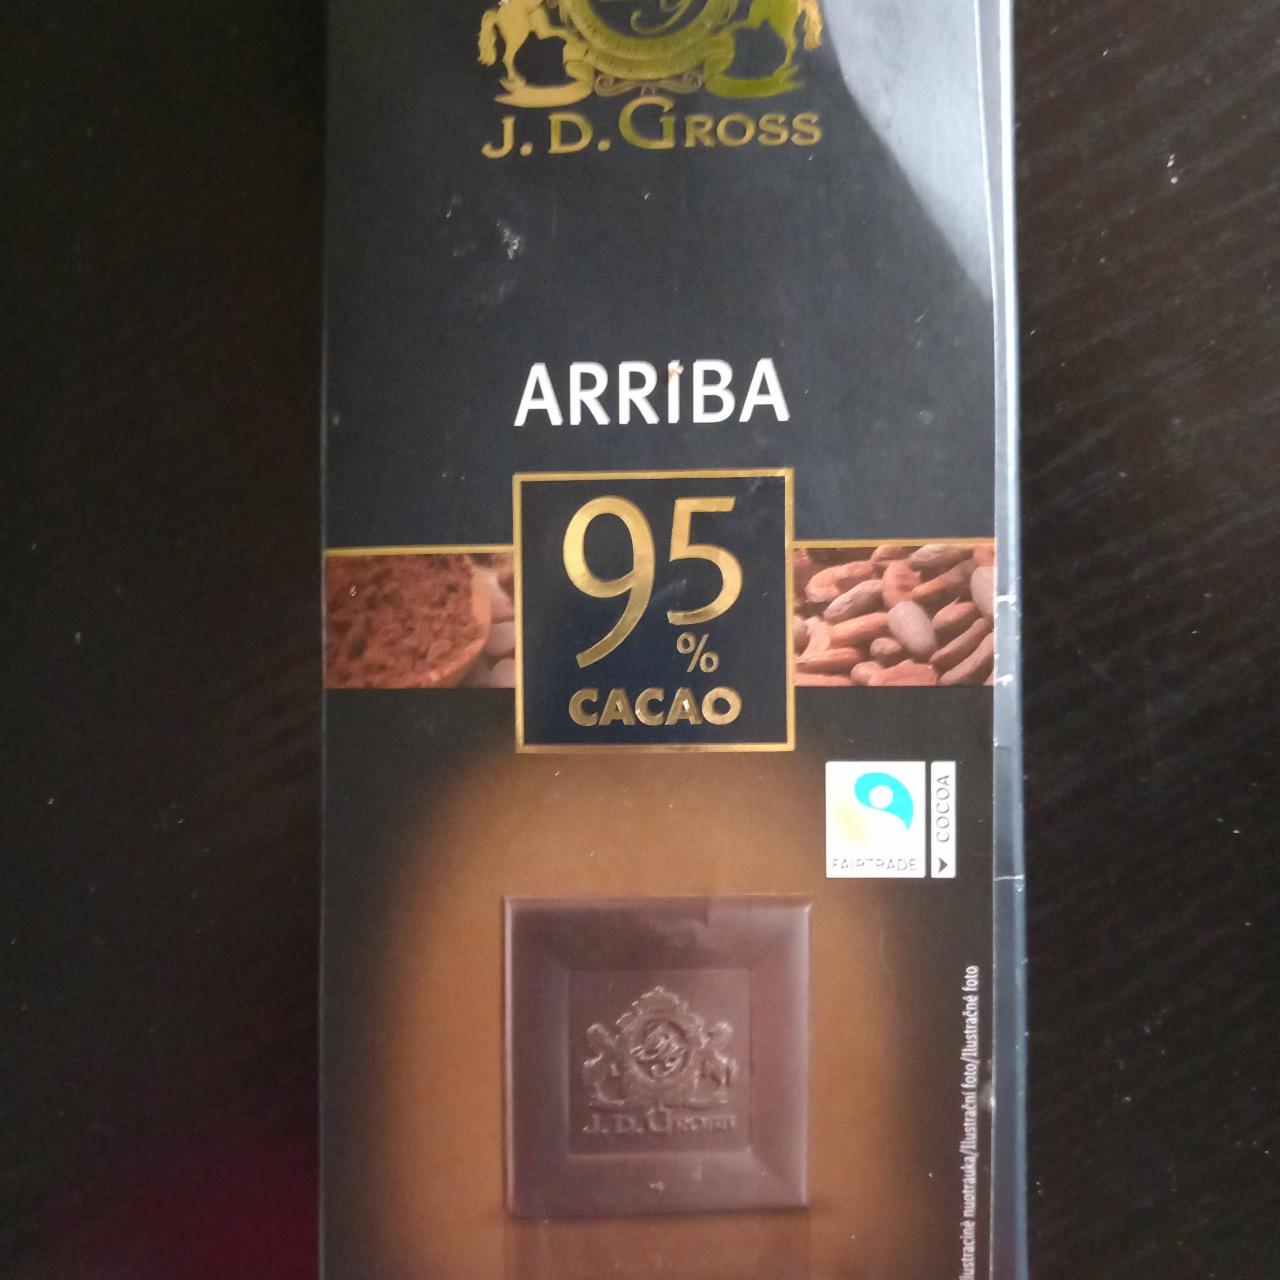 Fotografie - Arriba 95% cacao J. D. Gross